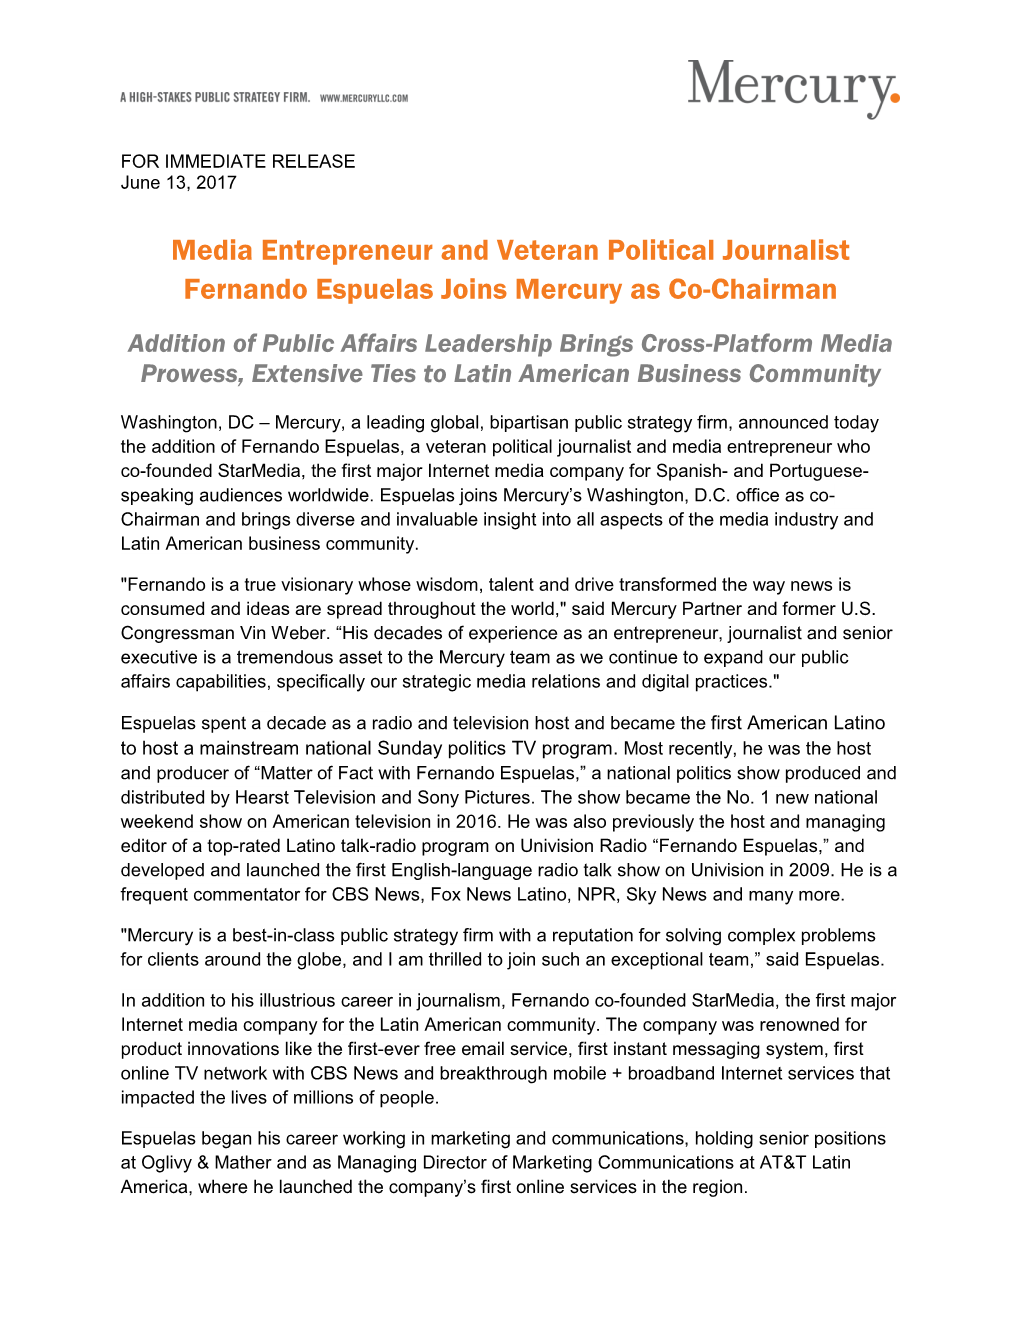 Media Entrepreneur and Veteran Political Journalist Fernando Espuelas Joins Mercury As Co-Chairman